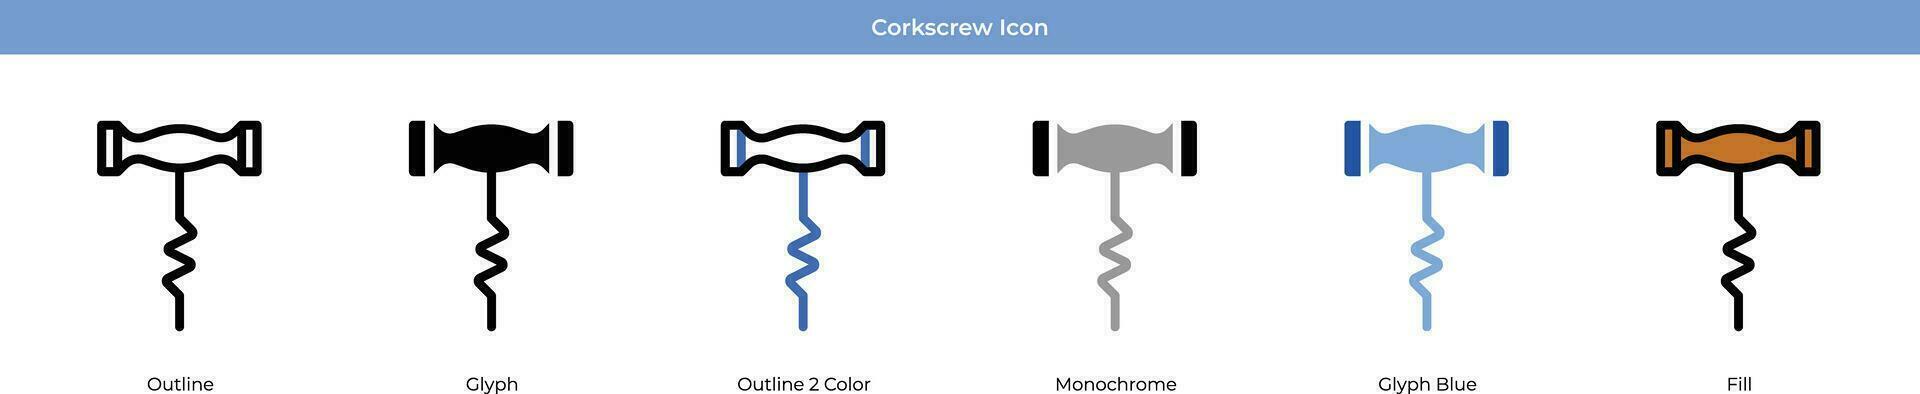 Corkscrew New year Icon Set Vector